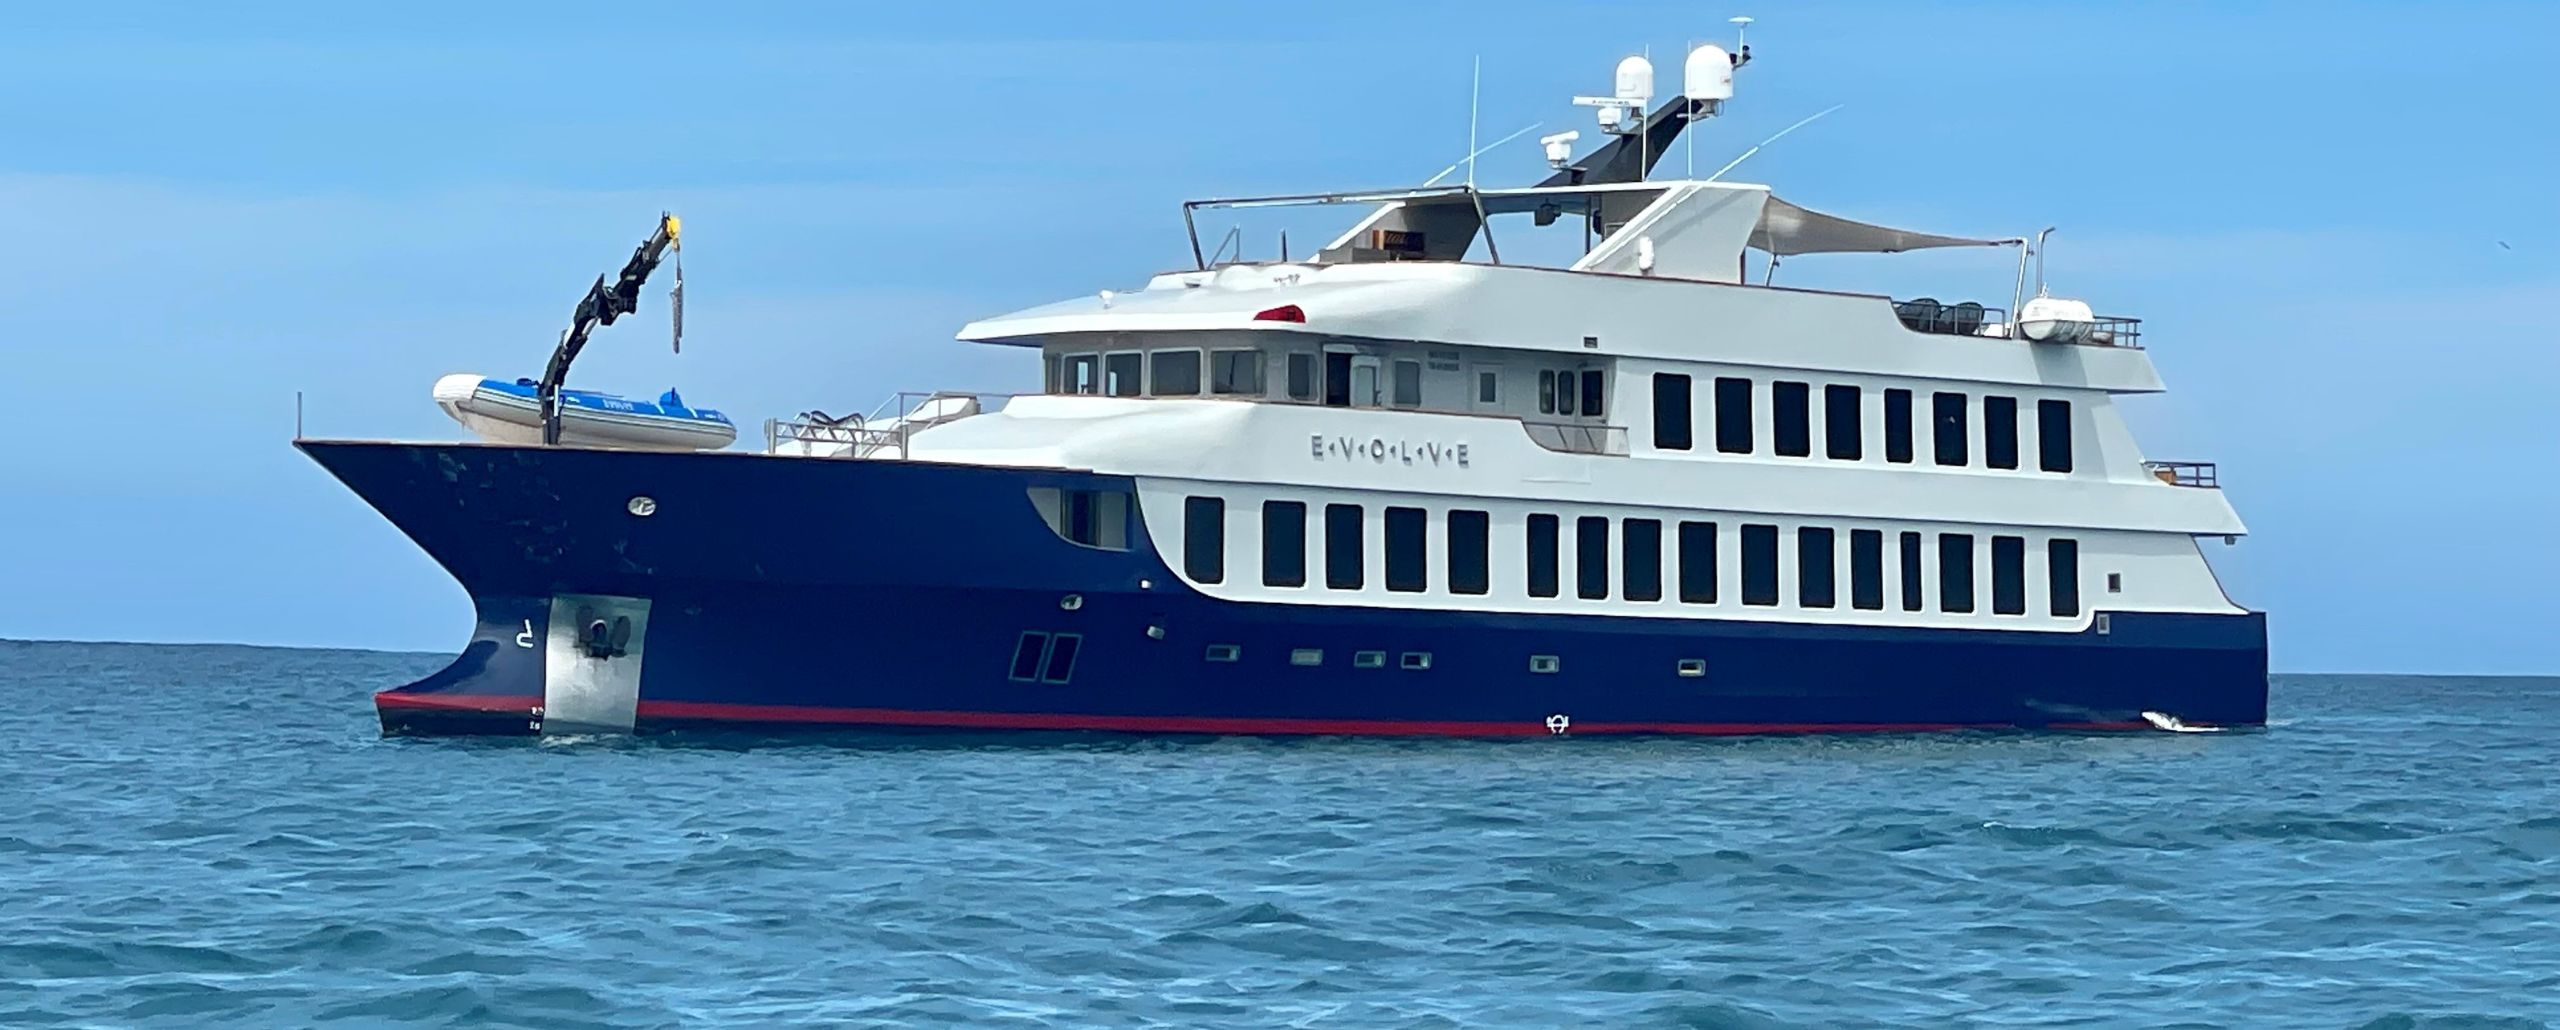 Evolve, cruise the Galápagos in a luxury yacht